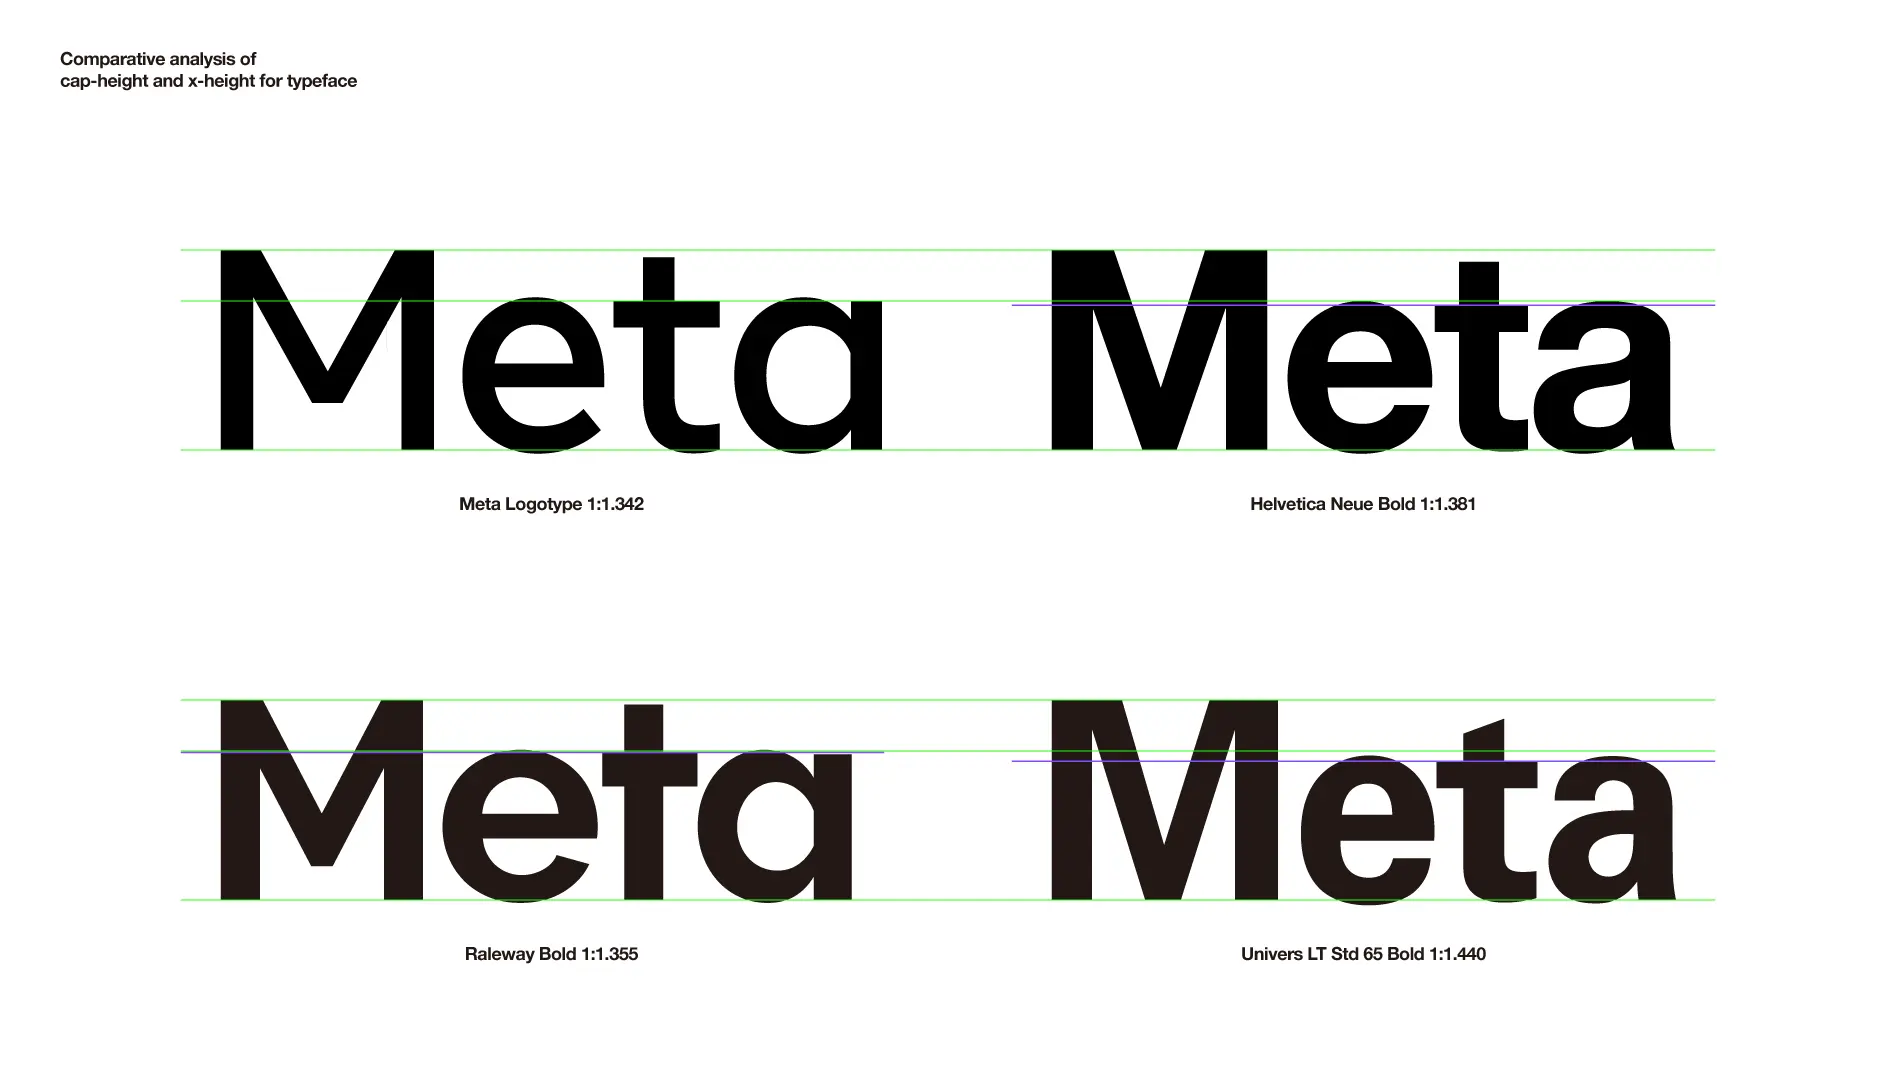 Meta（メタ）のロゴタイプデザイン刷新事例 グリッド分析とロゴタイプ比較 近似書体による比較